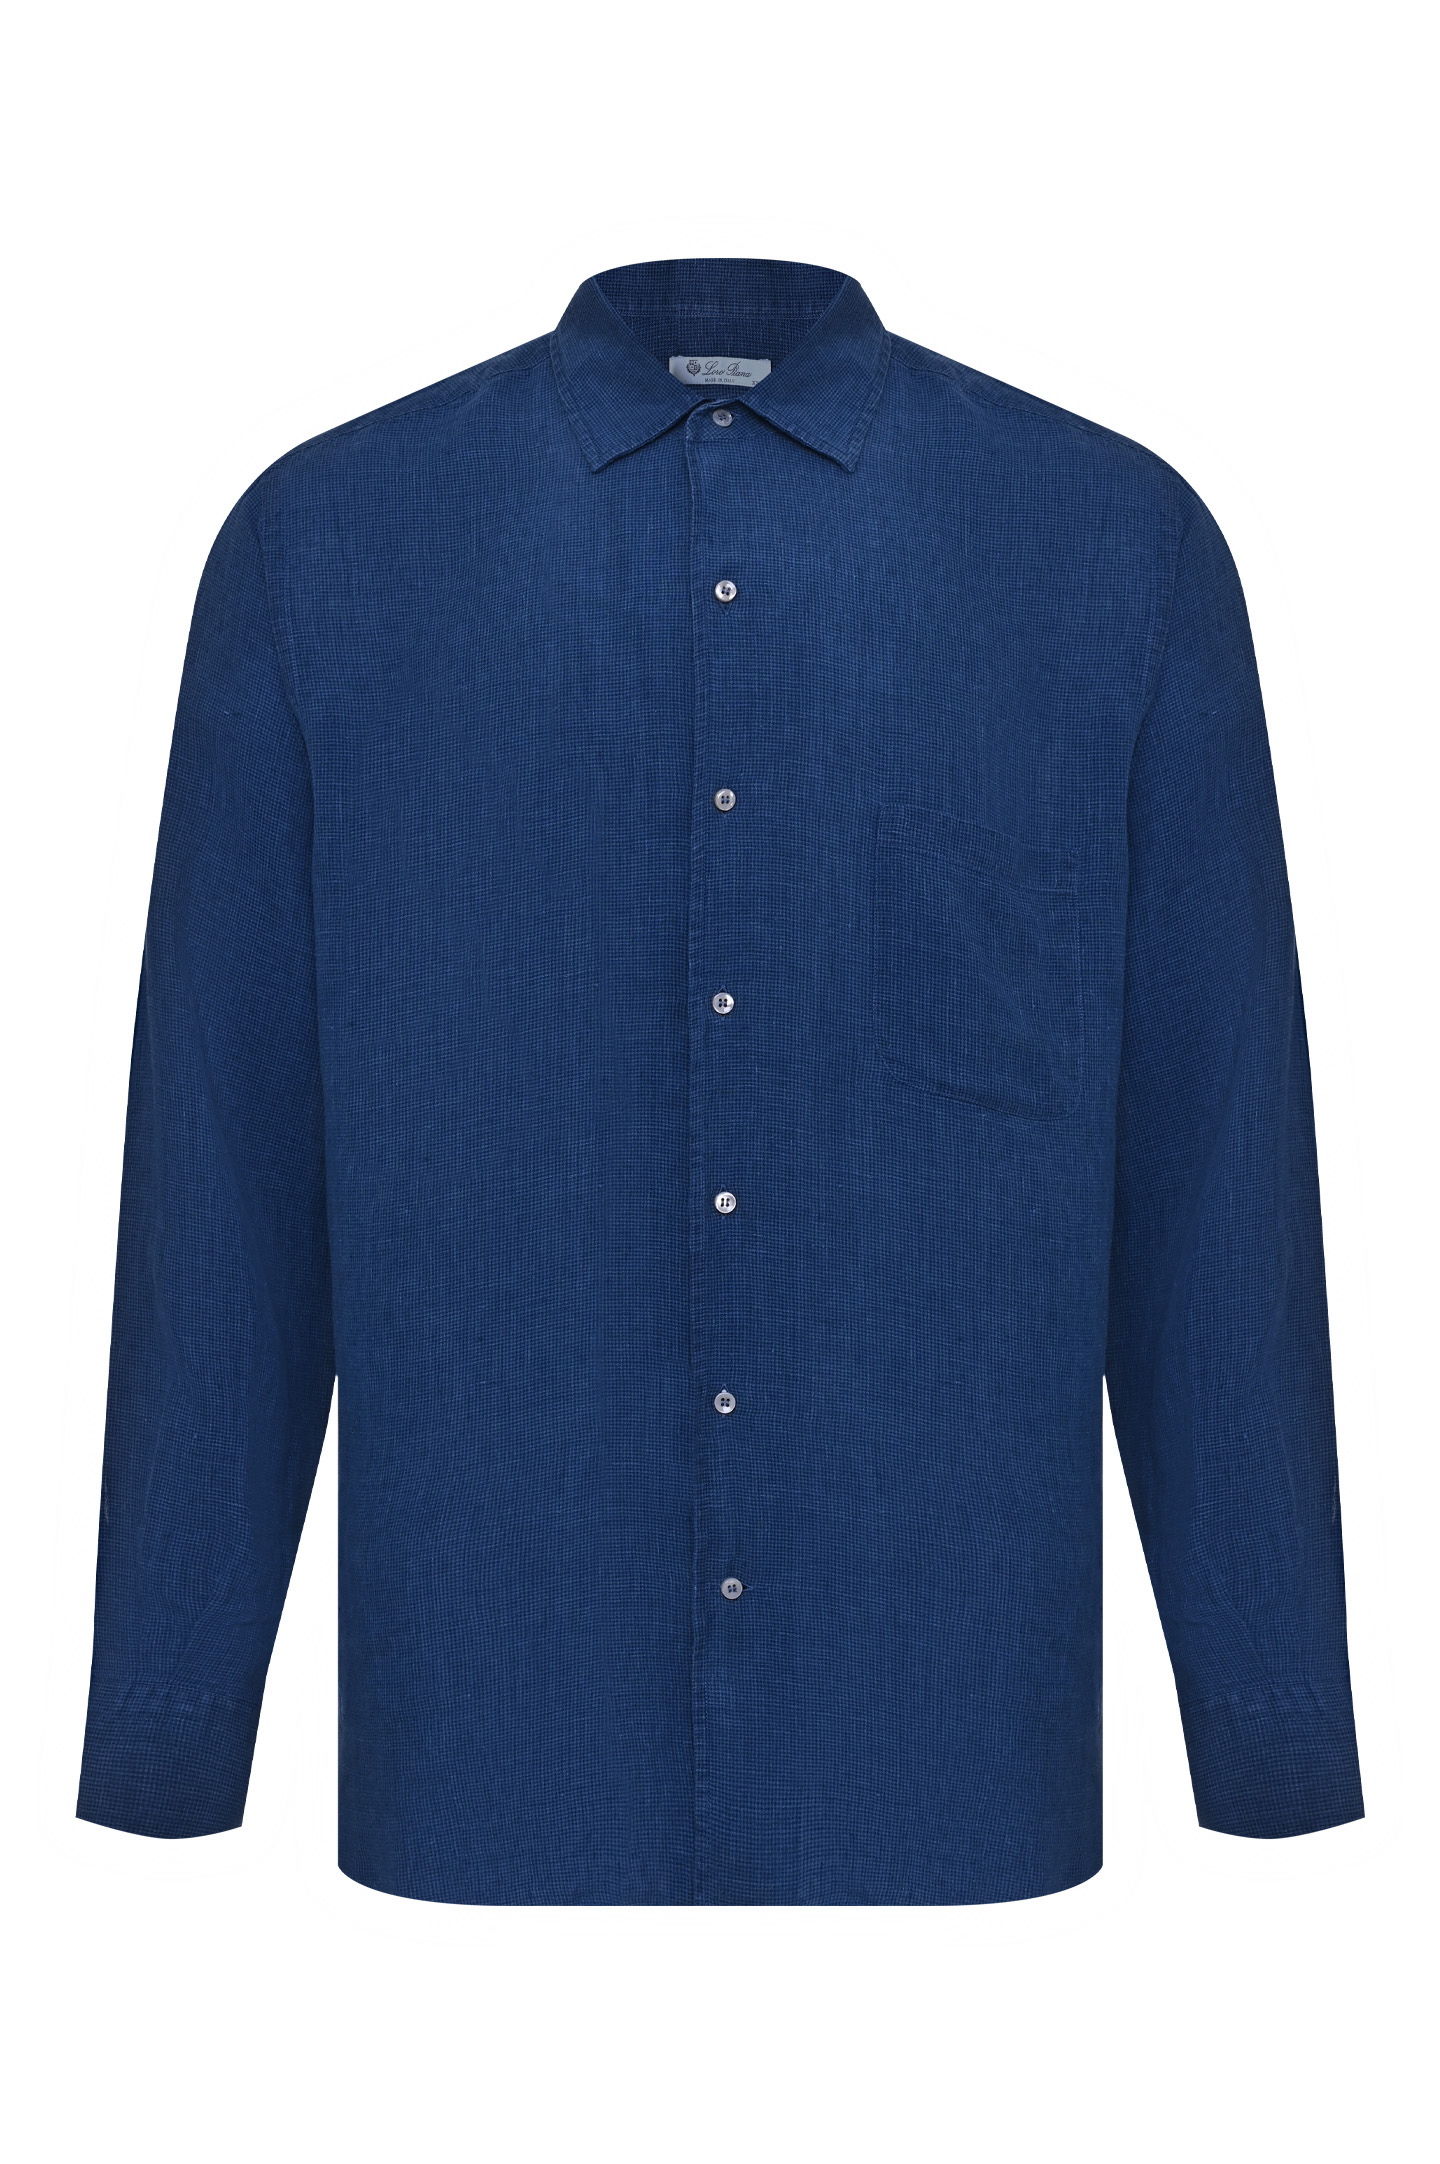 Рубашка LORO PIANA F1-FAM1826, цвет: Синий, Мужской